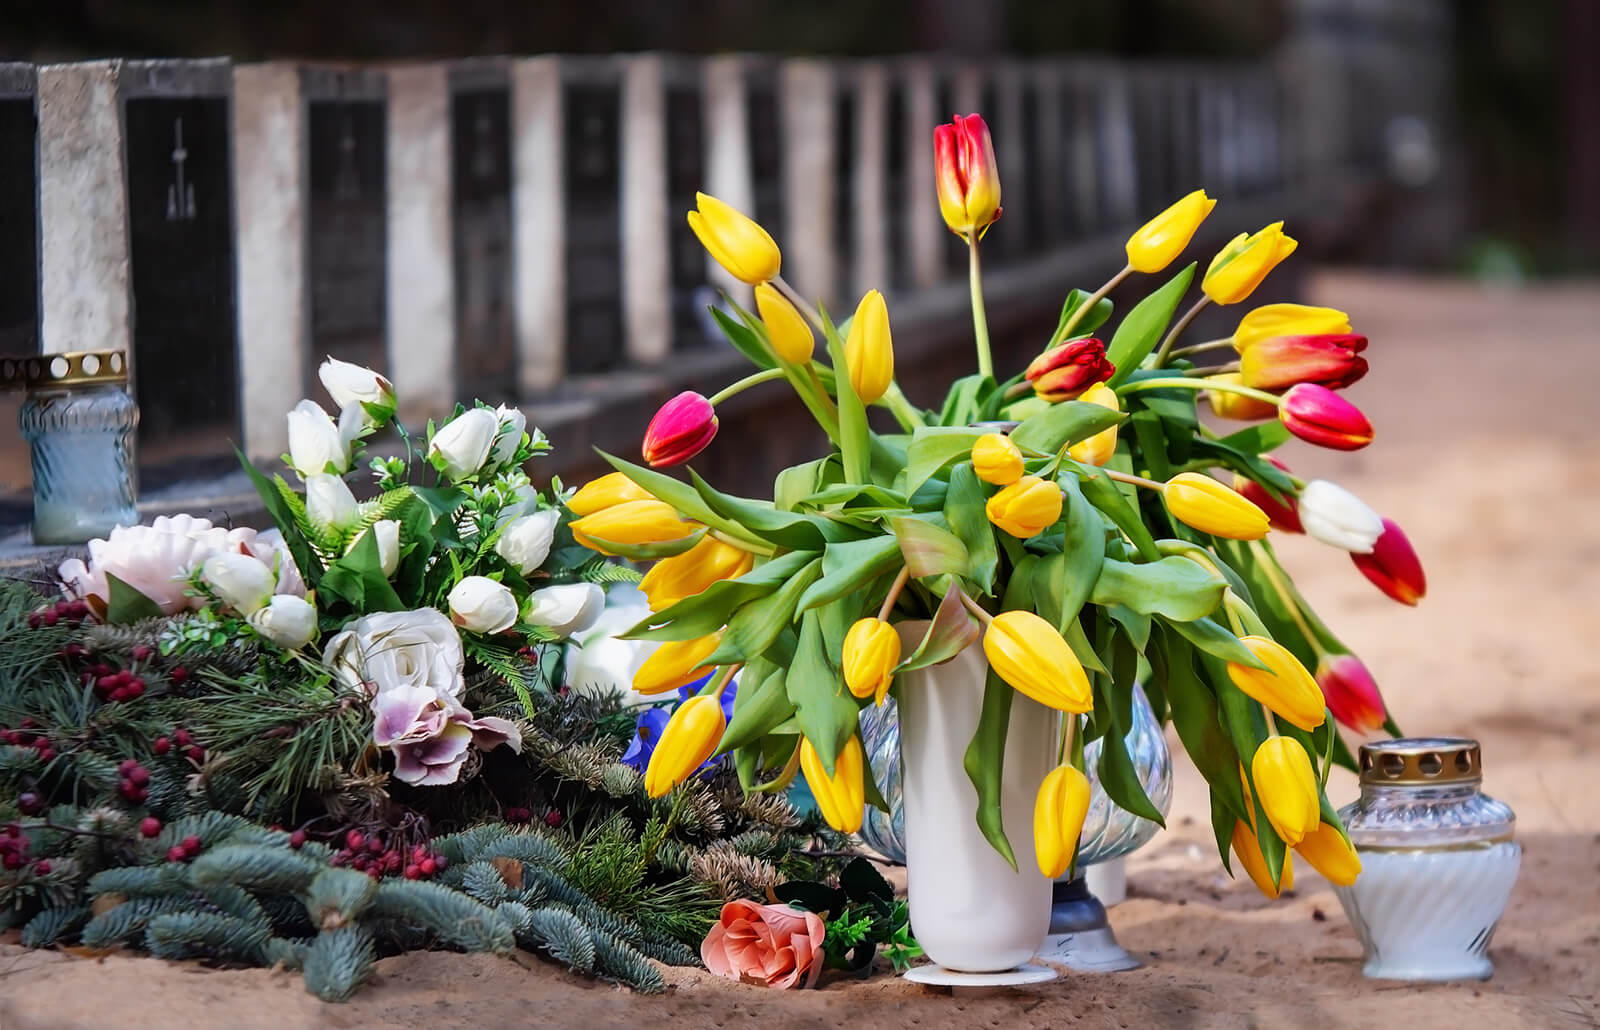 How To Make Cemetery Vase Flower Arrangements